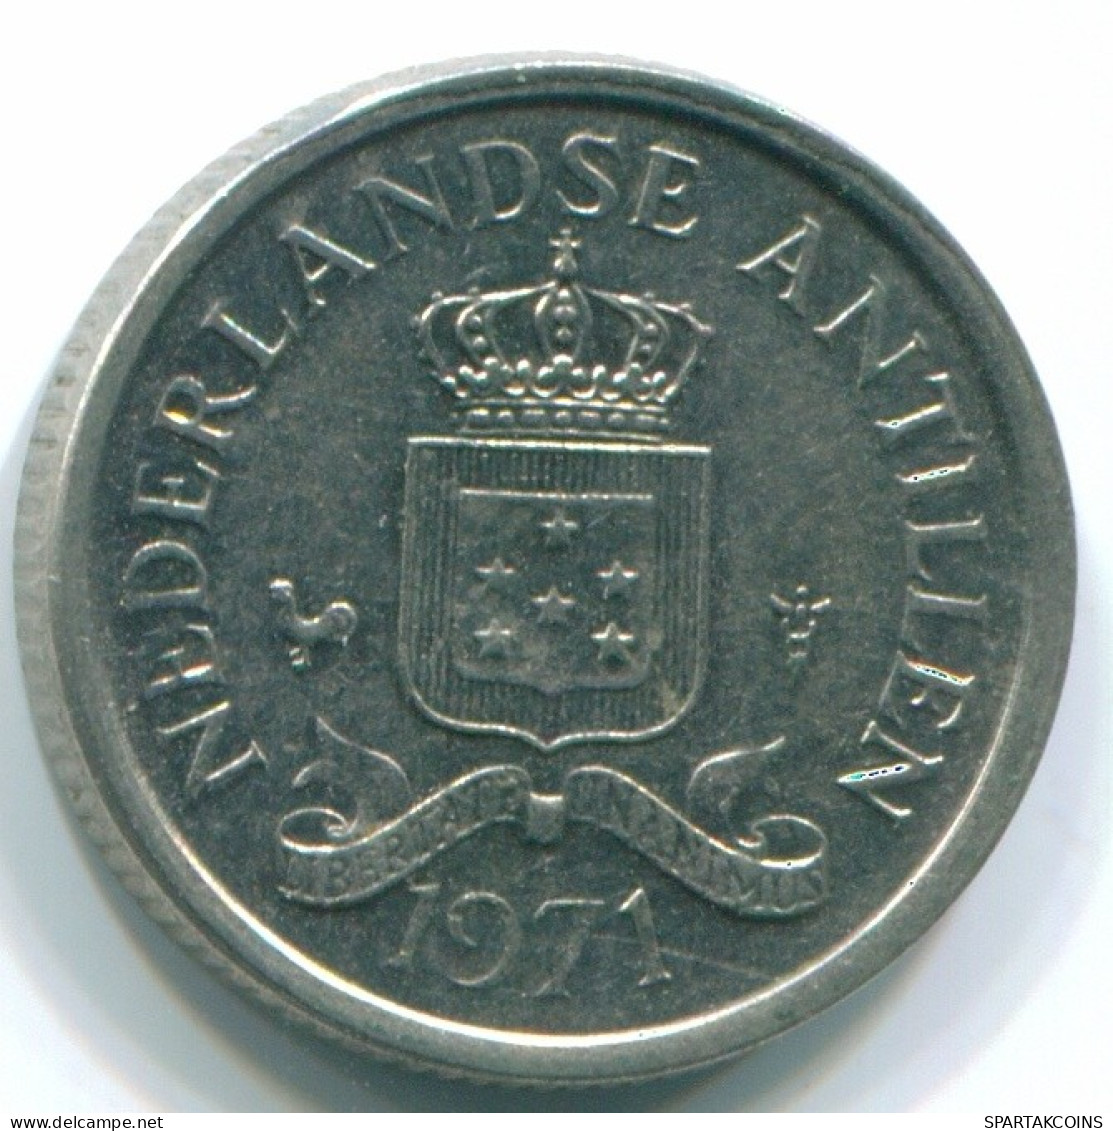 10 CENTS 1971 NIEDERLÄNDISCHE ANTILLEN Nickel Koloniale Münze #S13461.D.A - Netherlands Antilles